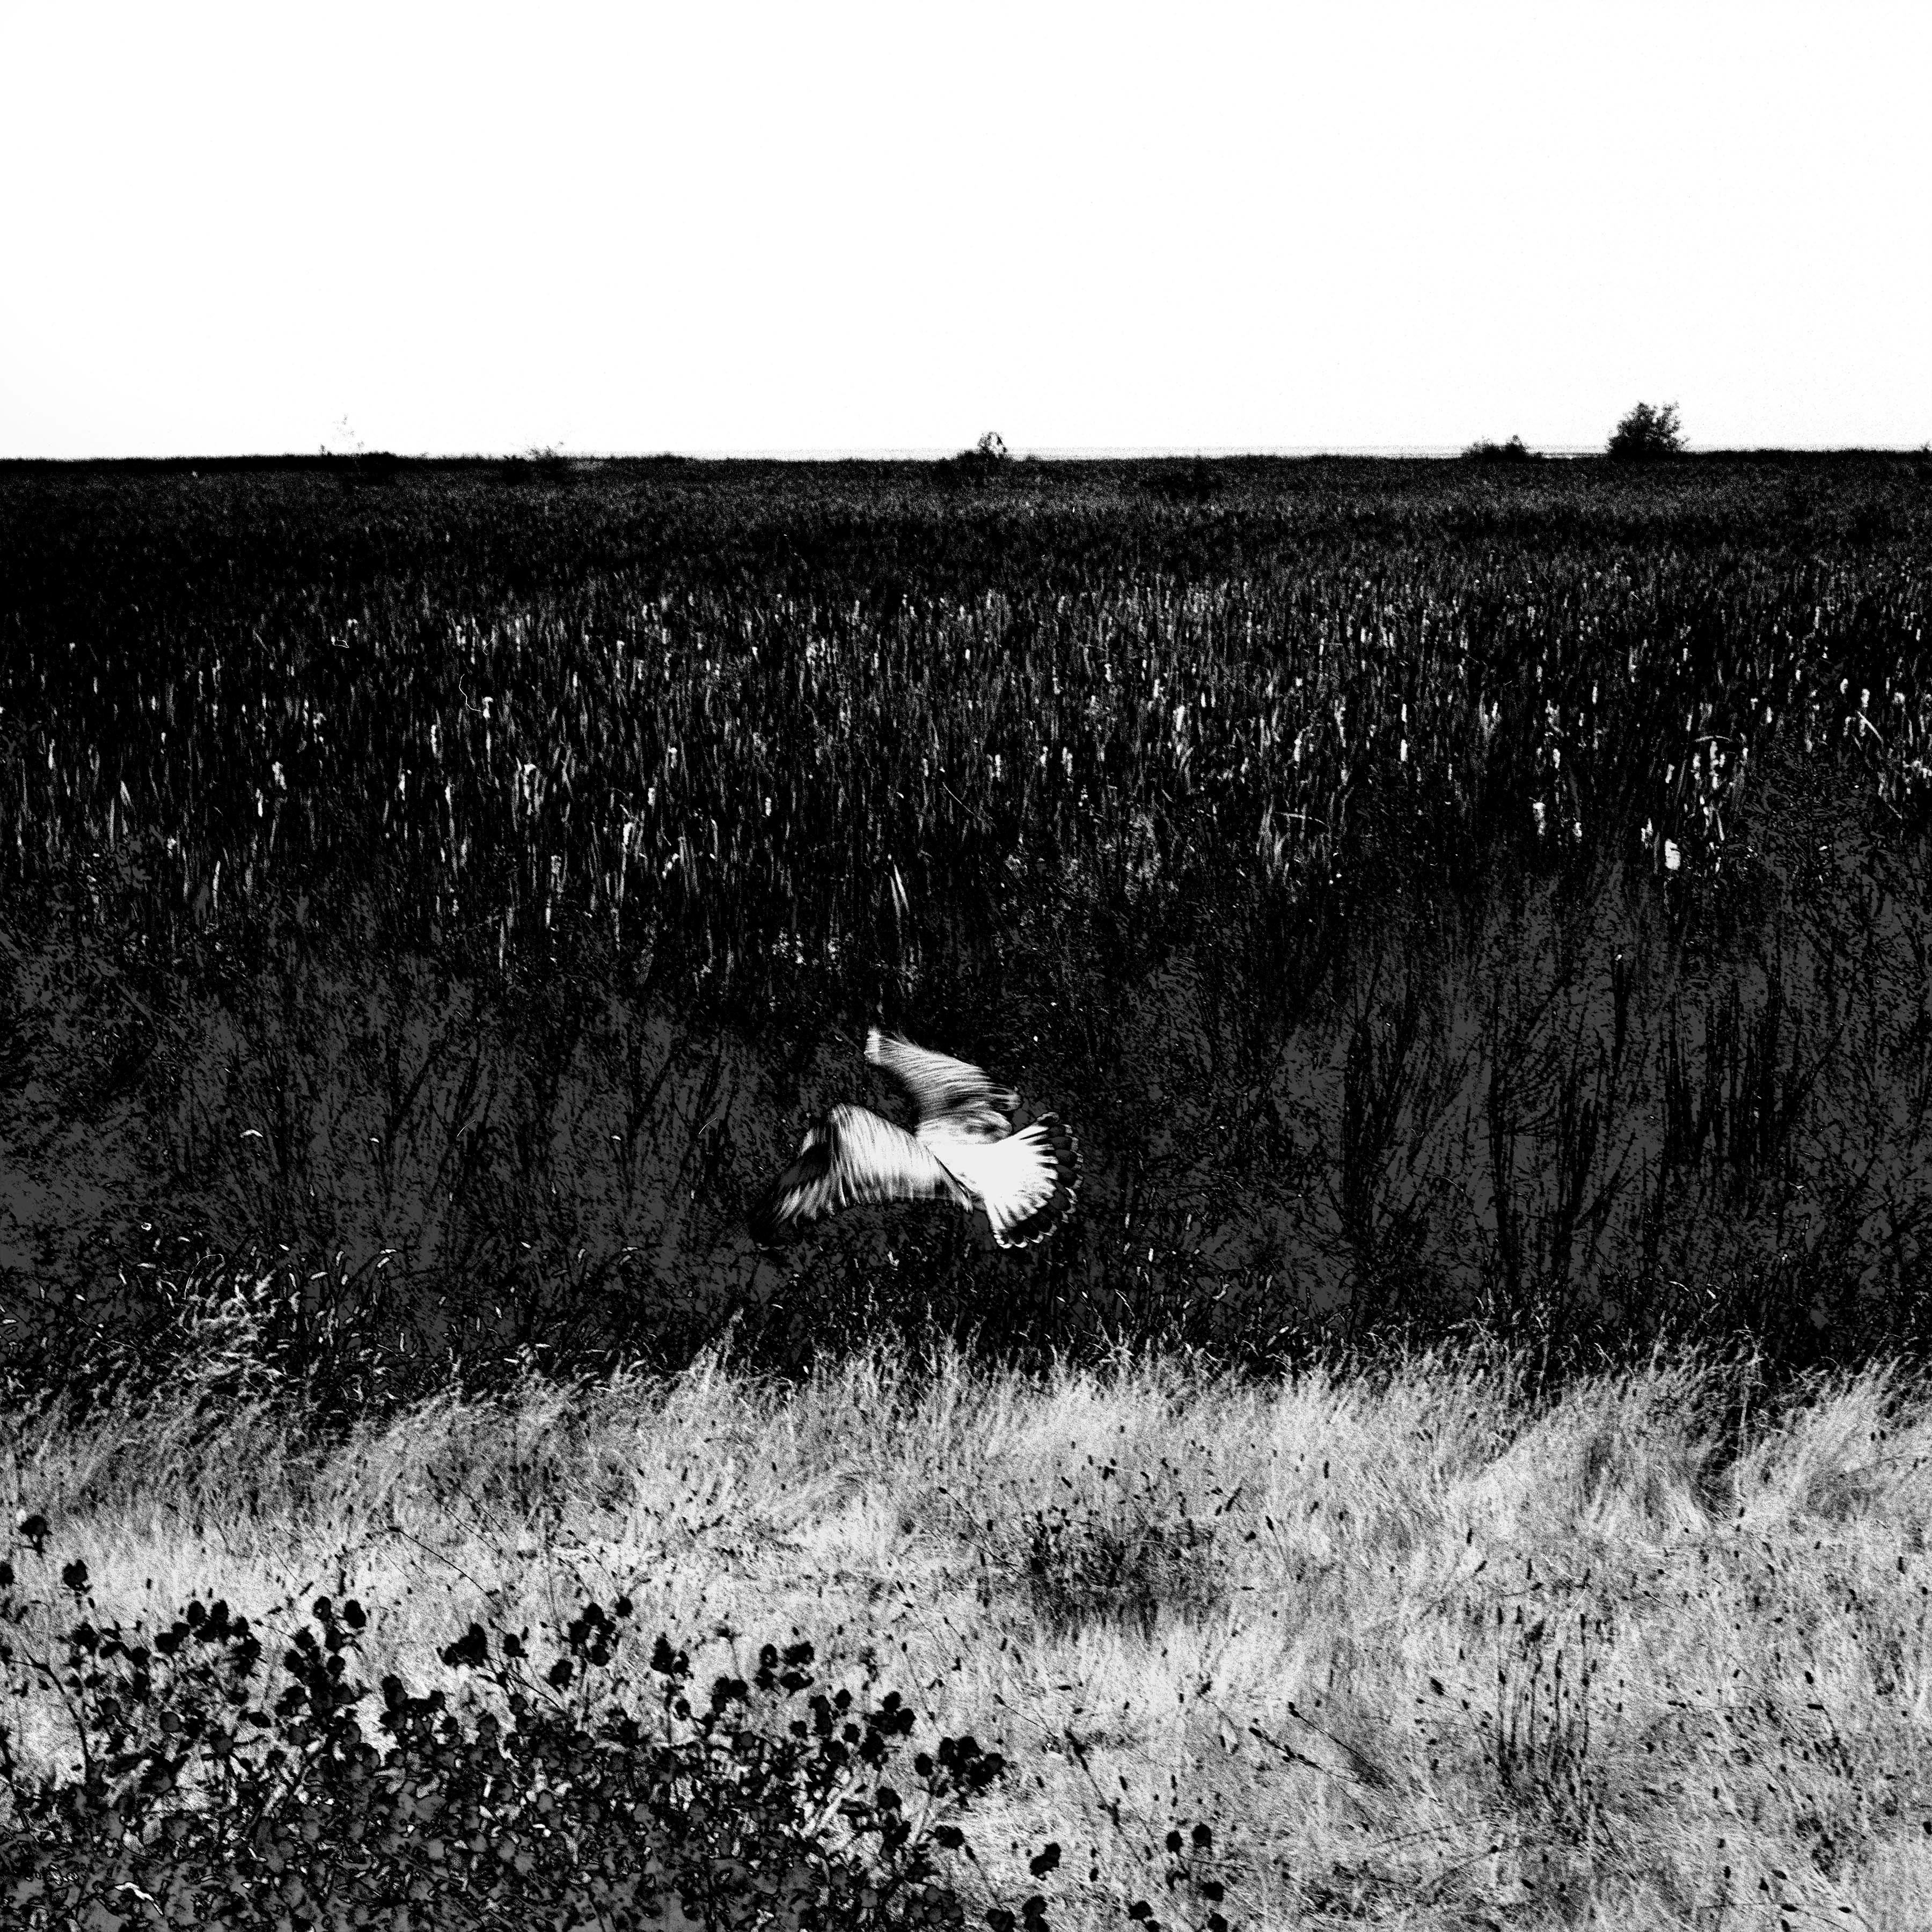 Osheen Harruthoonyan Landscape Photograph - Moments Between Moments, Abstract landscape photograph, bird mid flight